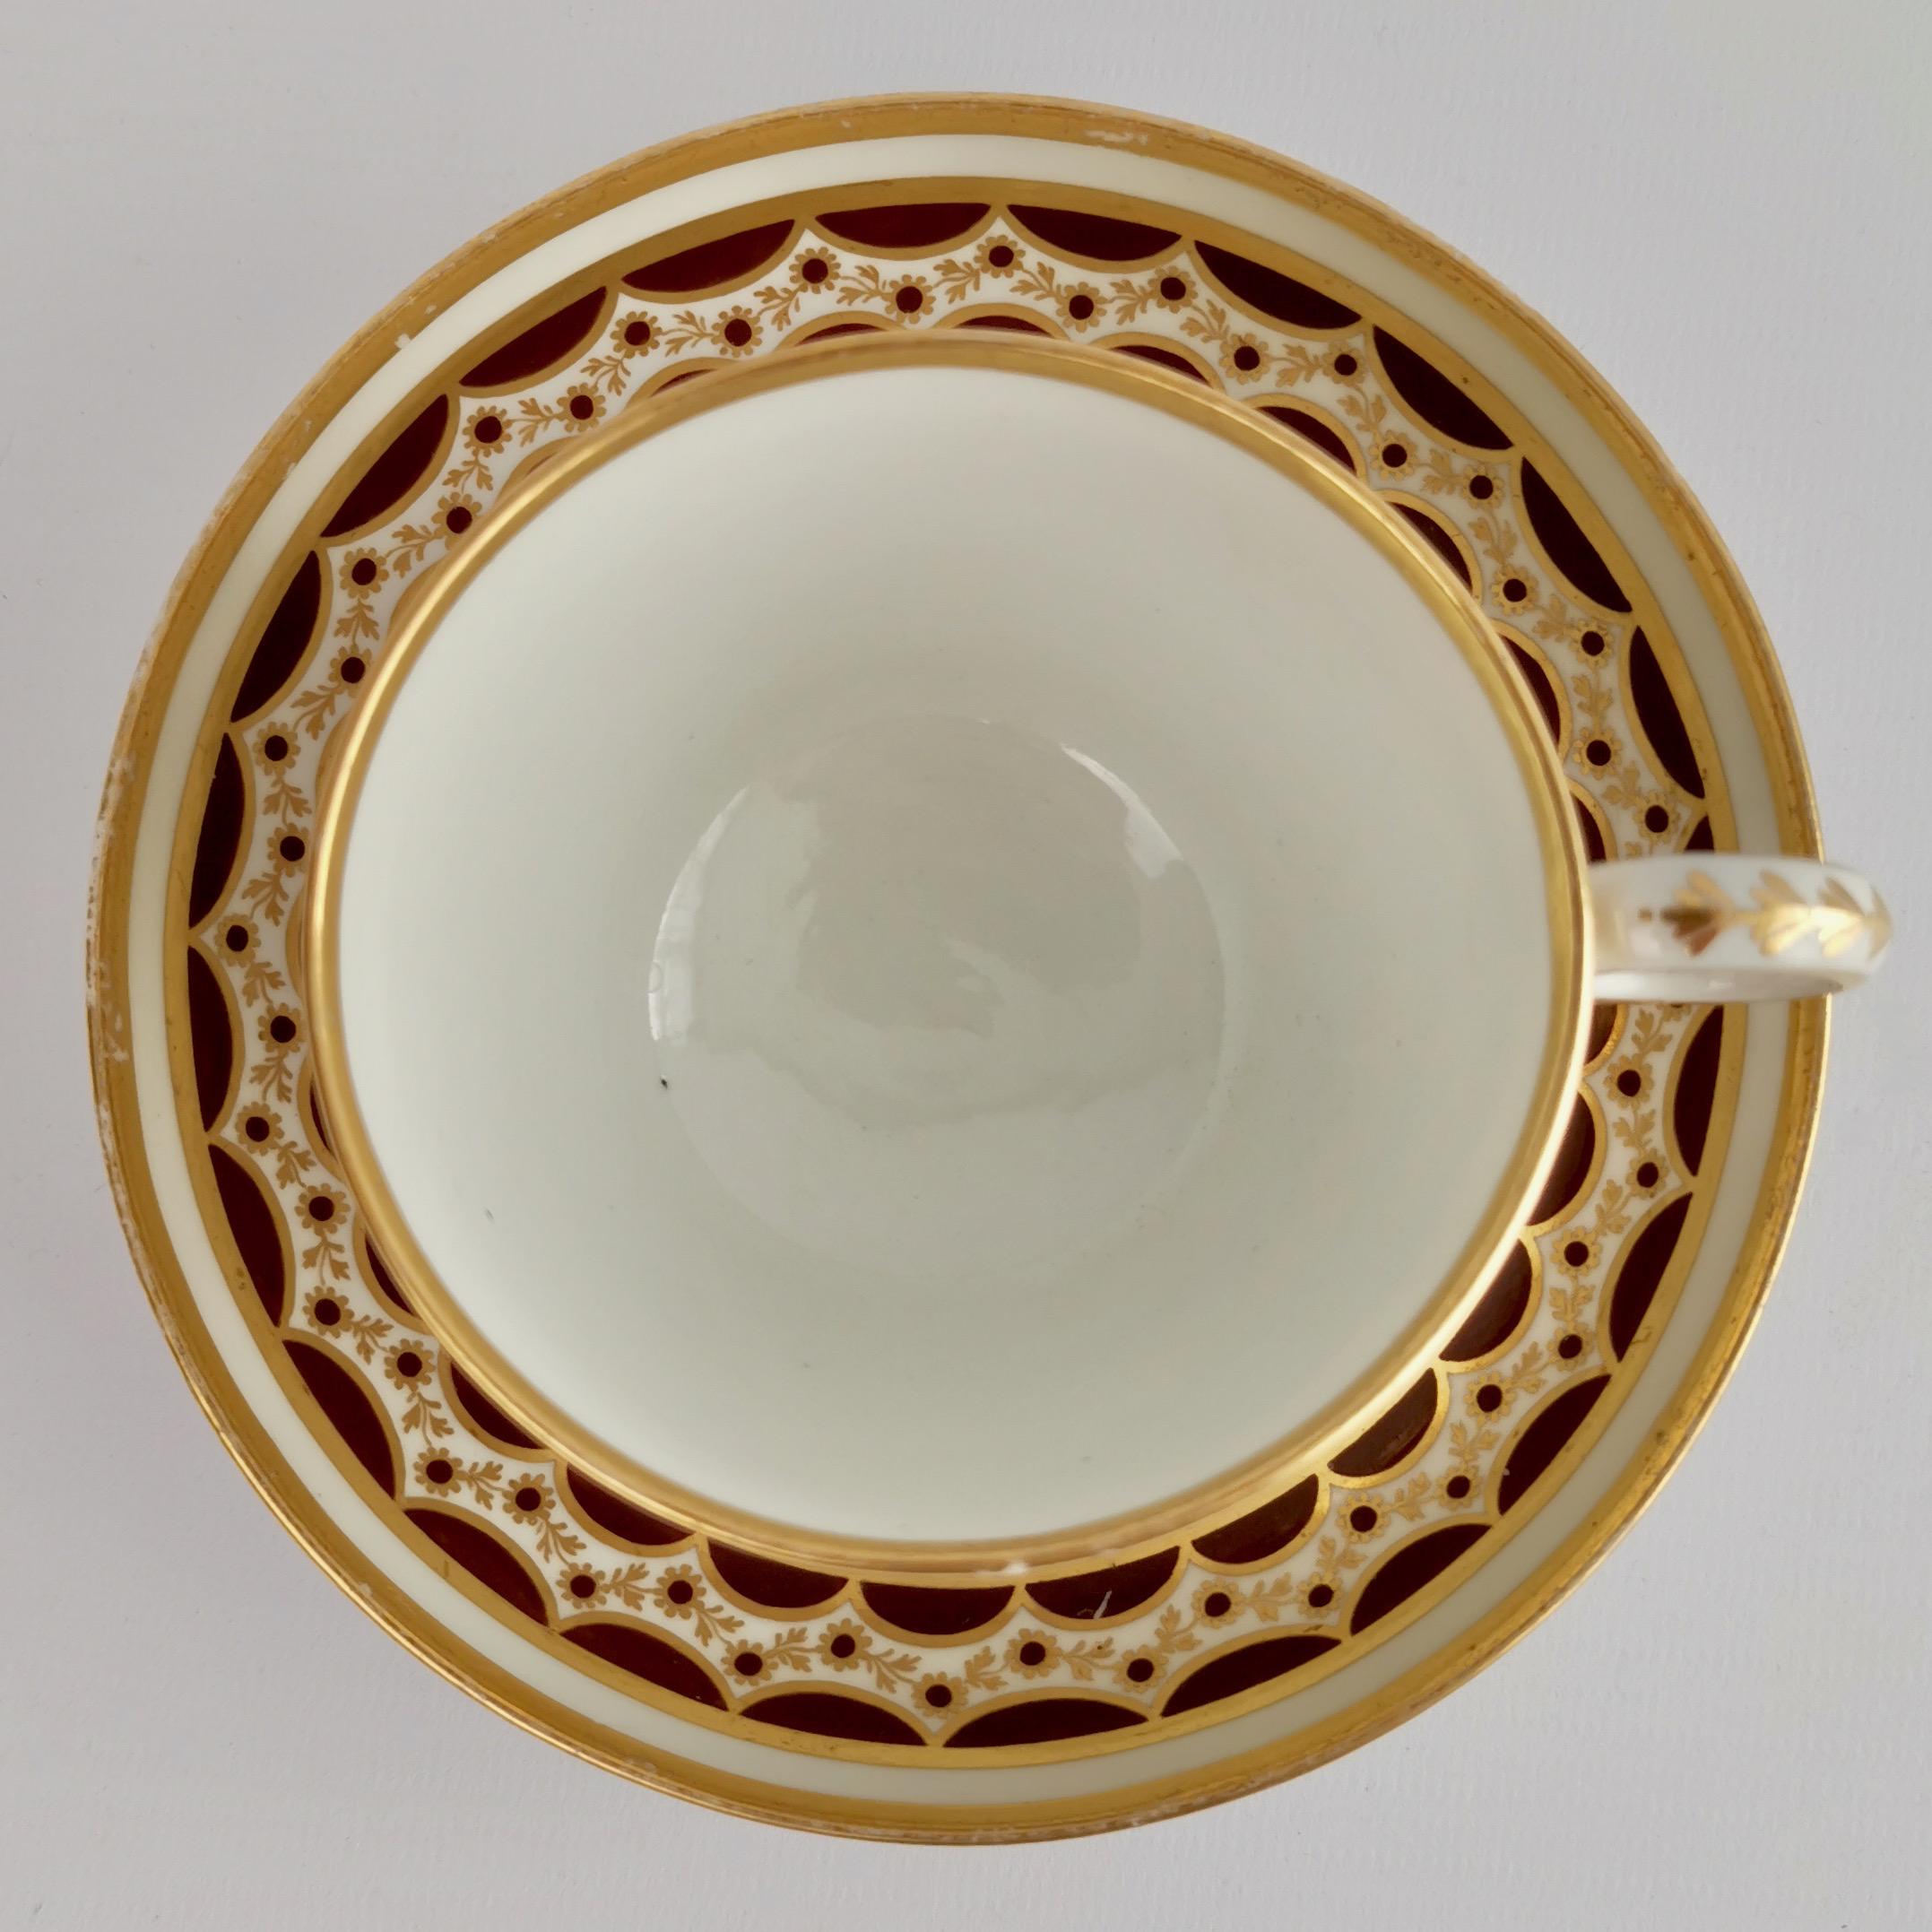 Flight & Barr Porcelain Teacup Trio, Brown and Gilt Pattern, Georgian, 1792-1804 For Sale 1